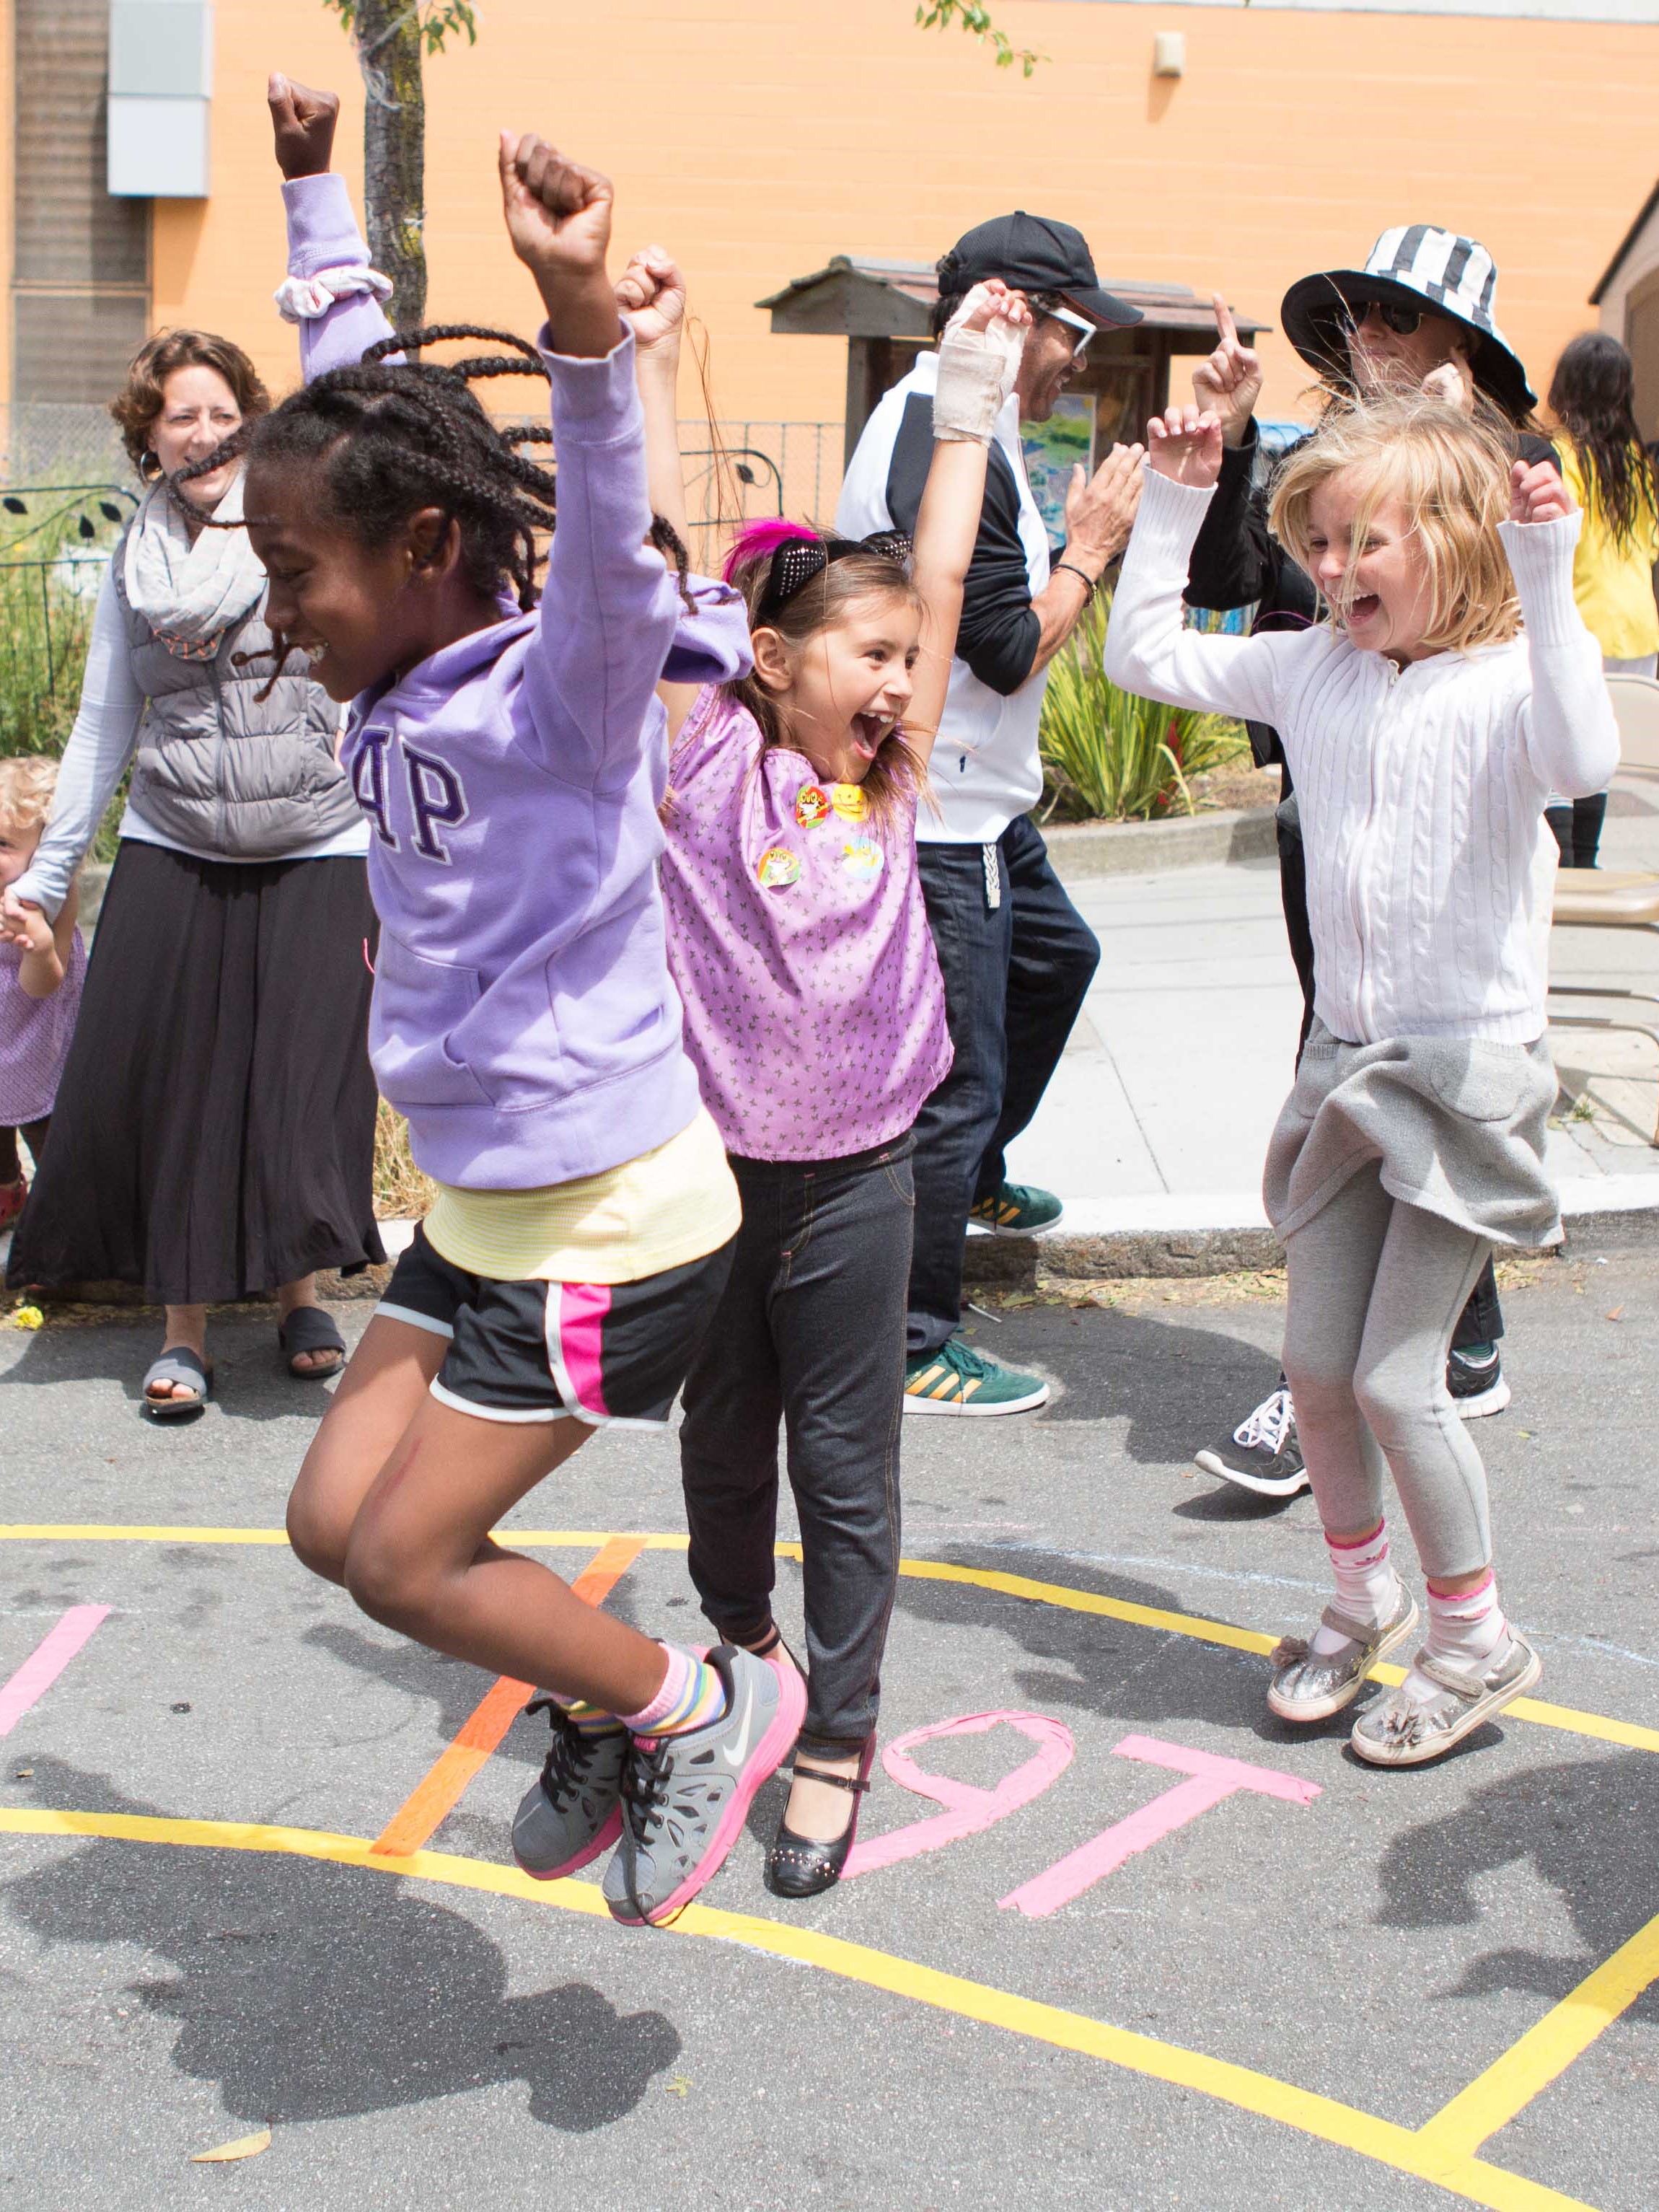 Three girls jumping joyfully after winning a game at an outdoor school festival